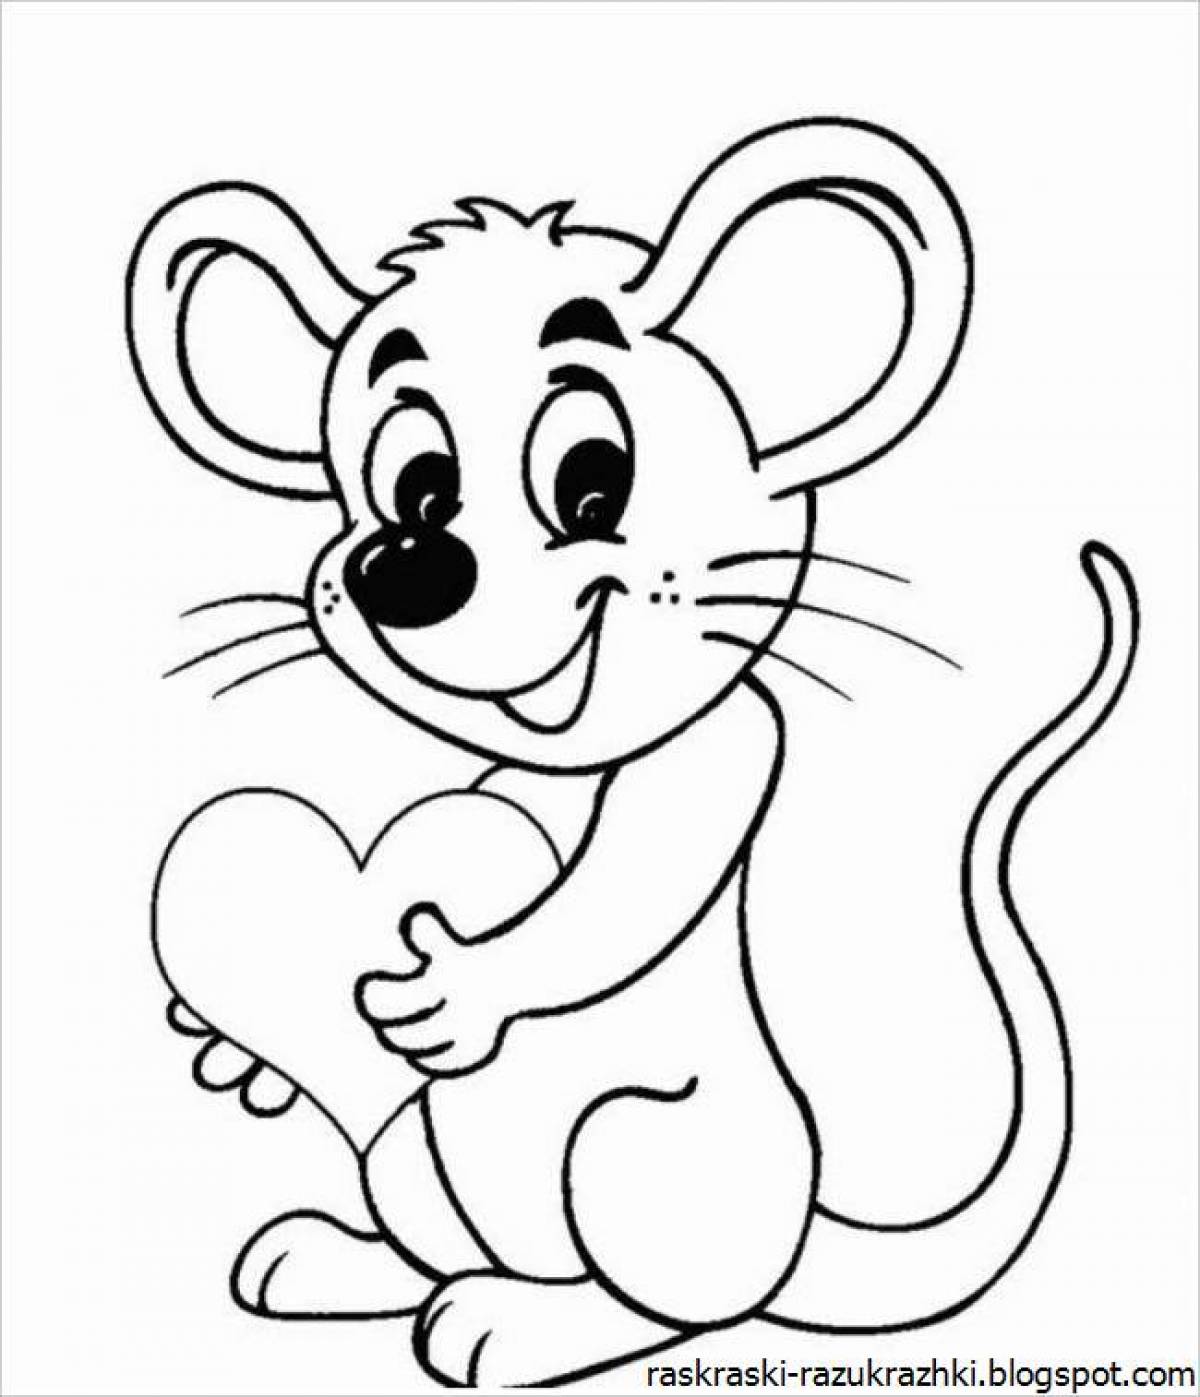 Coloring page joyful little mouse